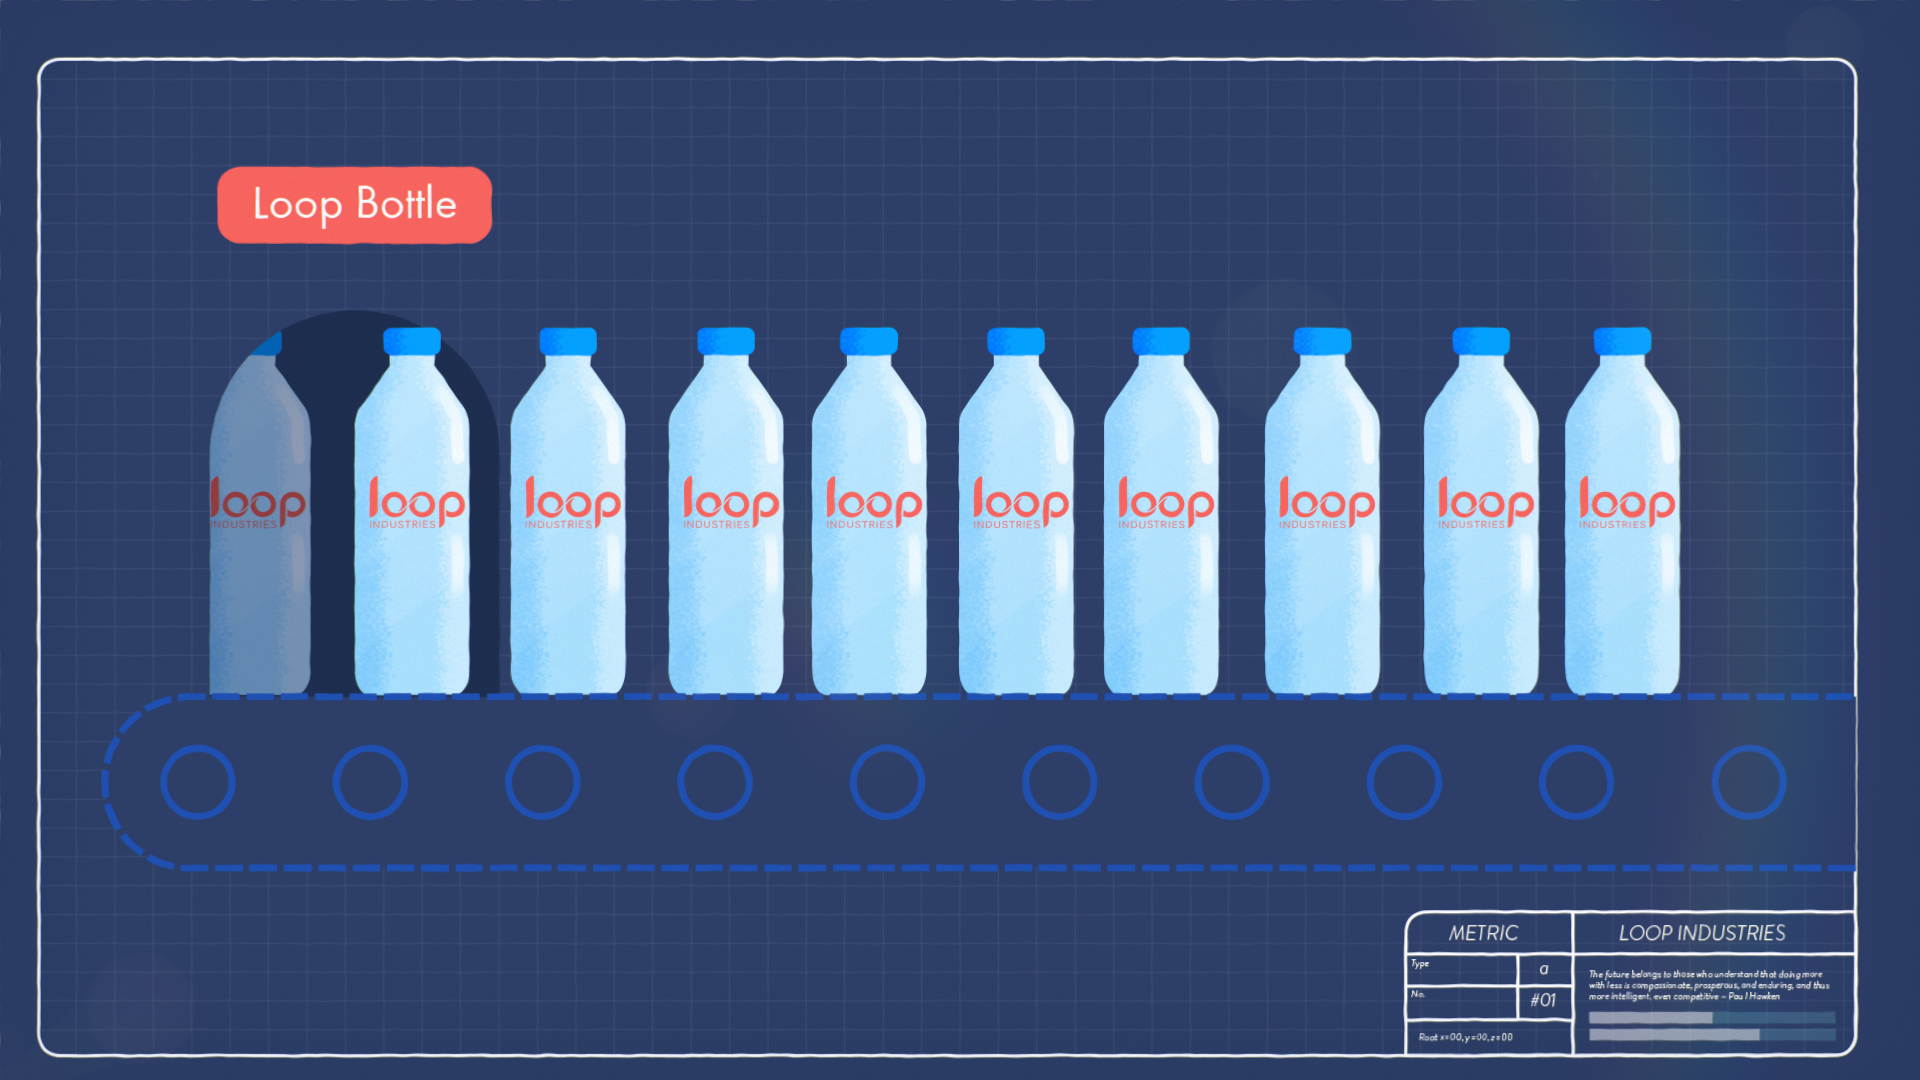 Loop industries infographic new bottles